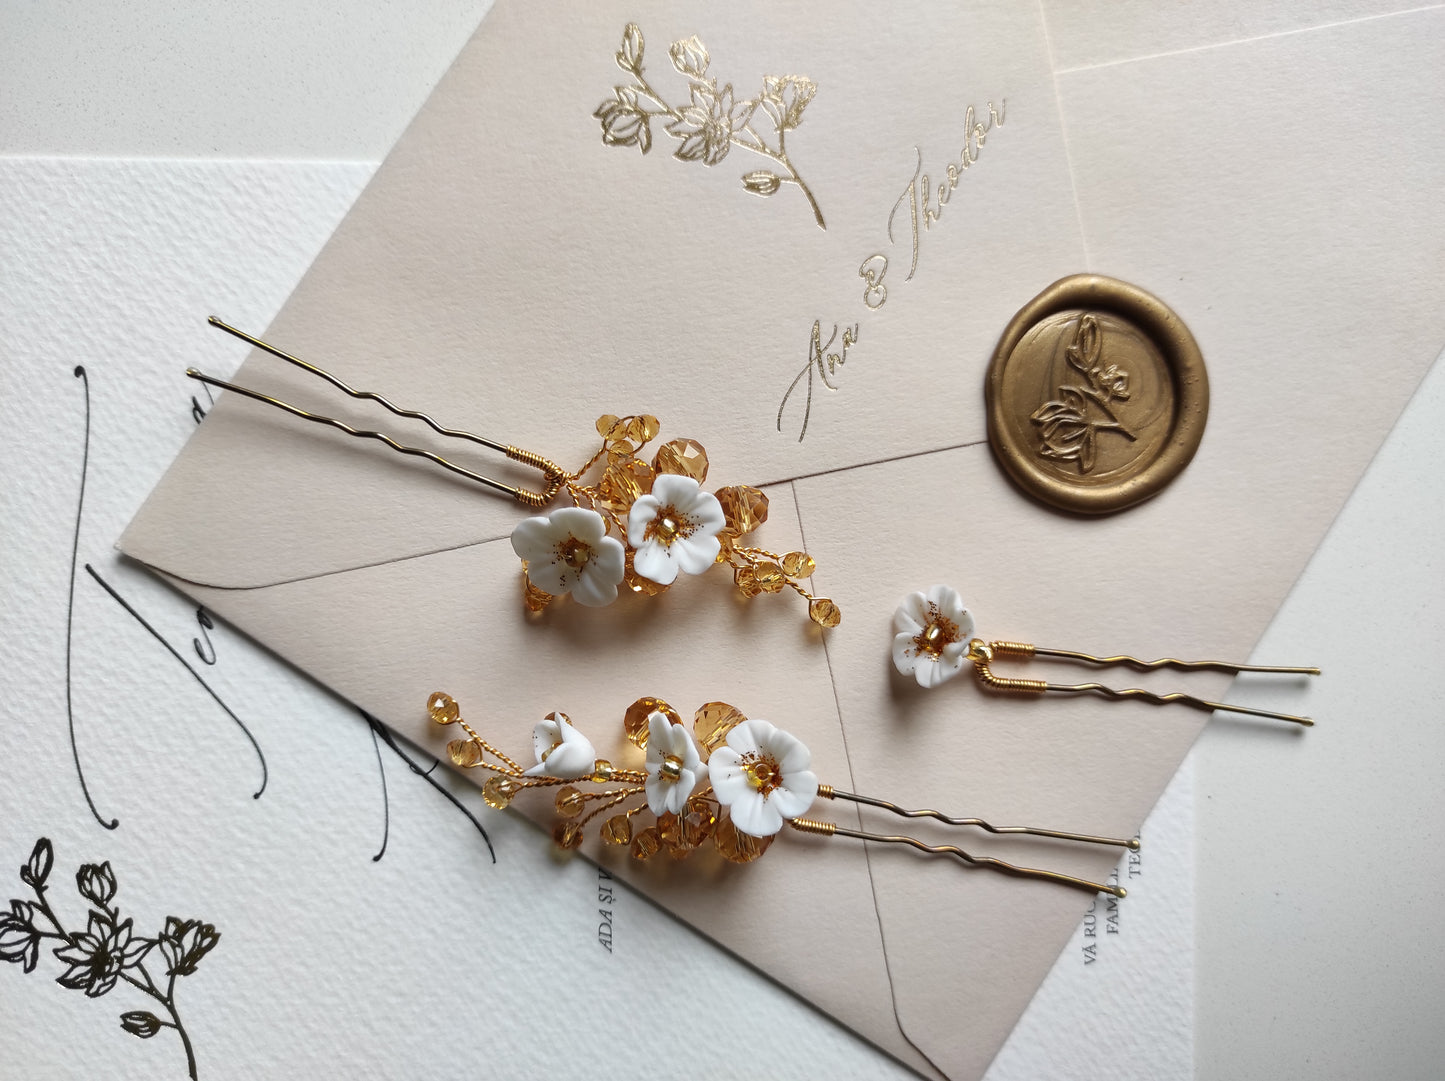 GOLD RUSH Hairpins || Bridal accessories / Wedding hair pins / Bridal hair pieces / Engagement jewelry / Hair adornment / Bridesmaids gift